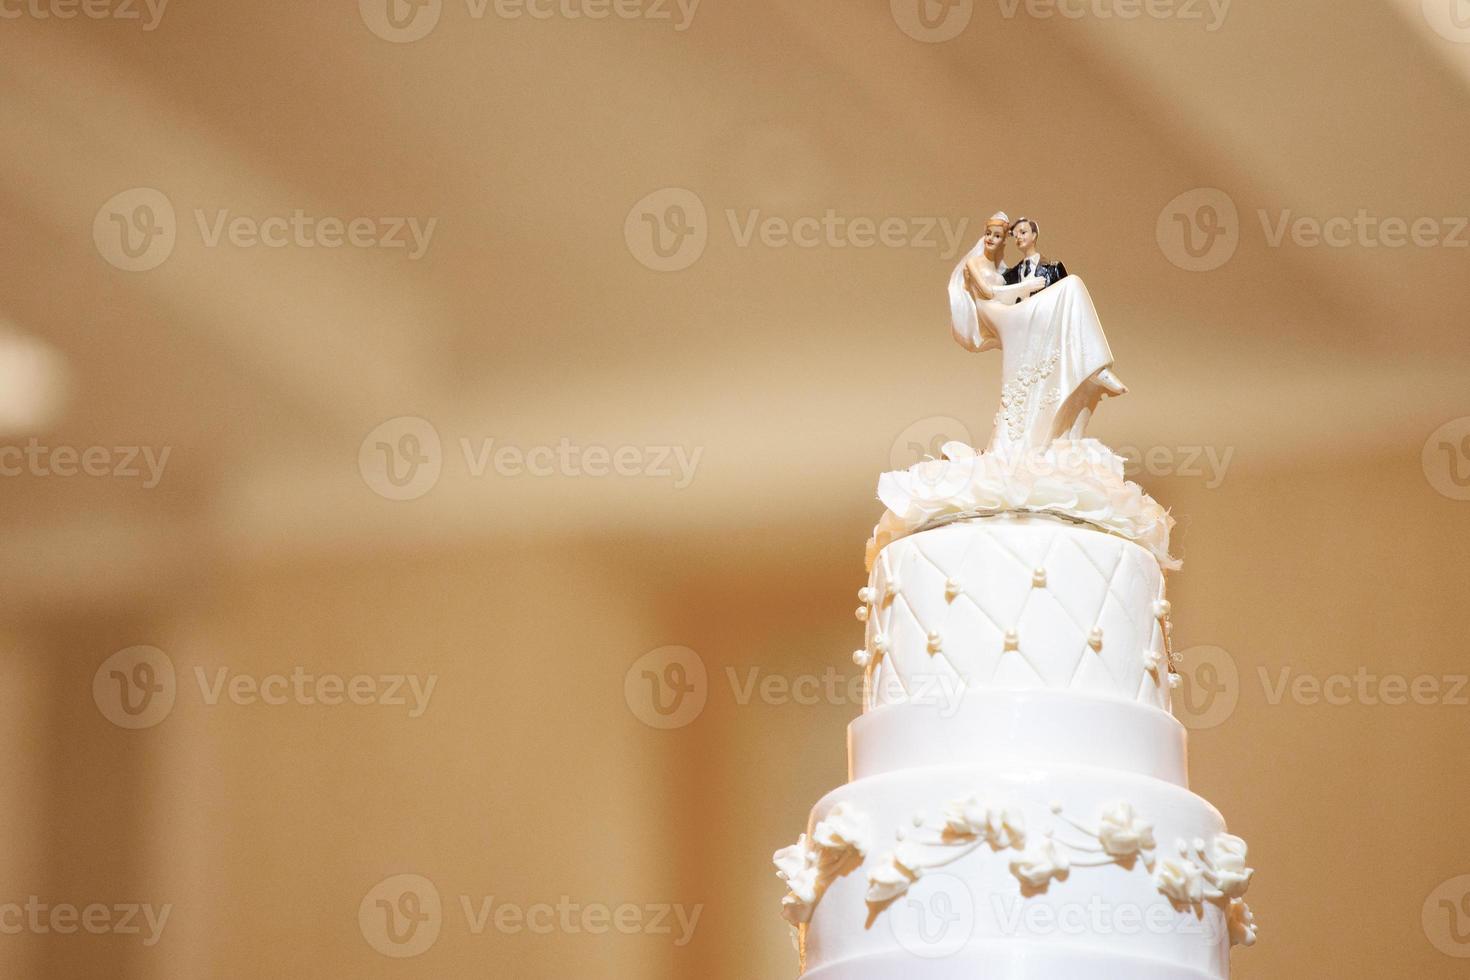 bruidstaart met bruid en bruidegom poppen bovenop met lege copyspace foto